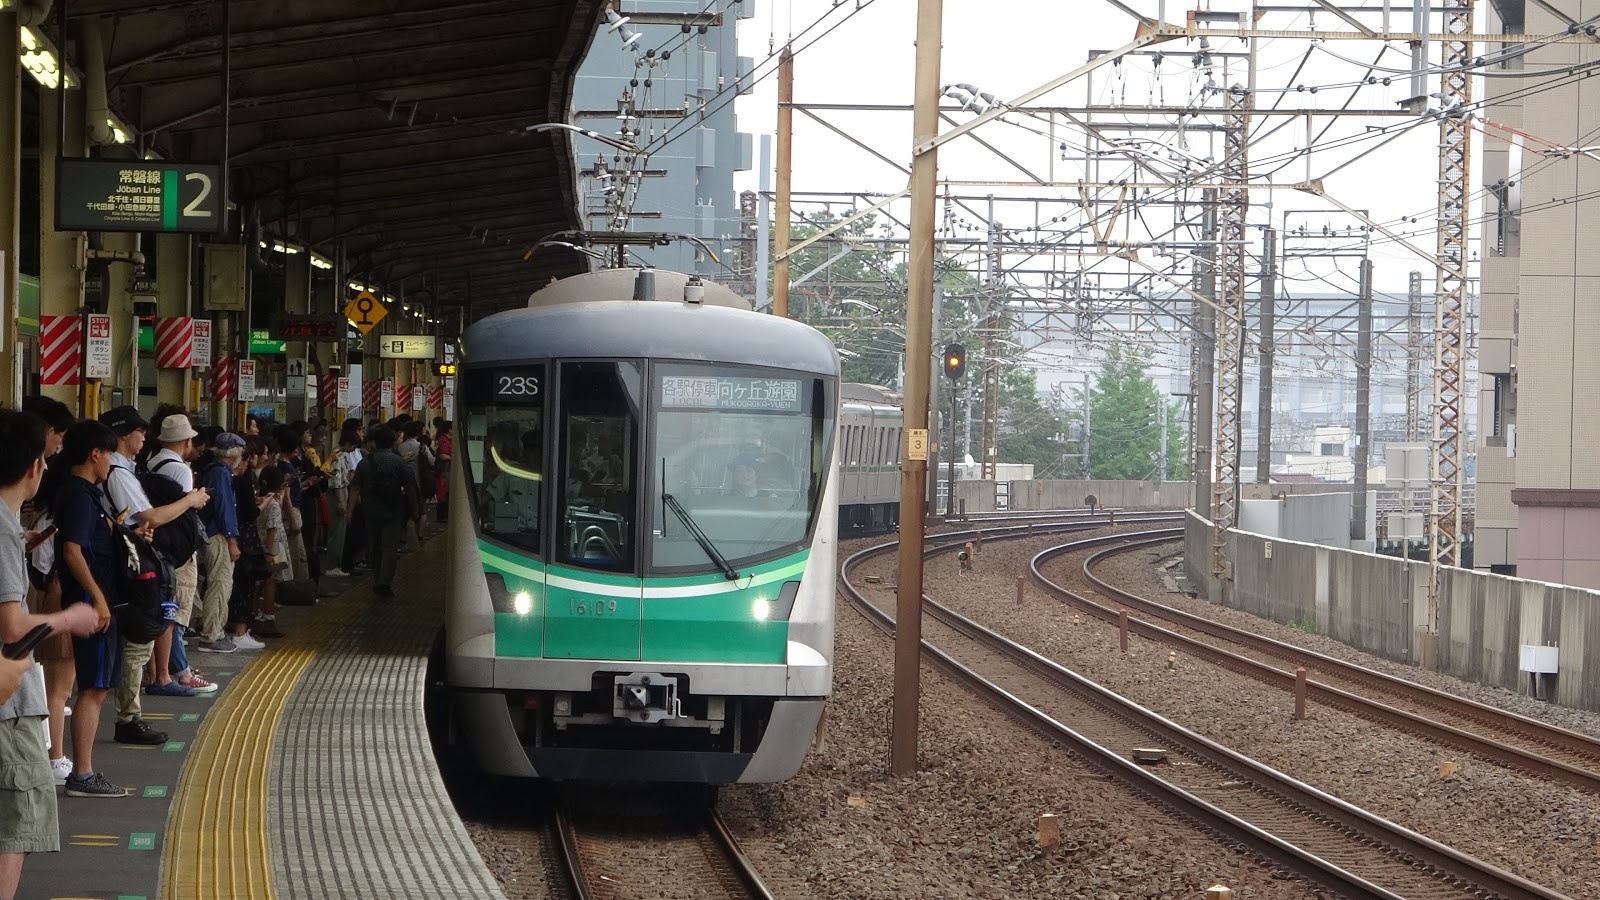 Blair S 鐵道攝影 東京地下鐵千代田線直通列車16000系電聯車